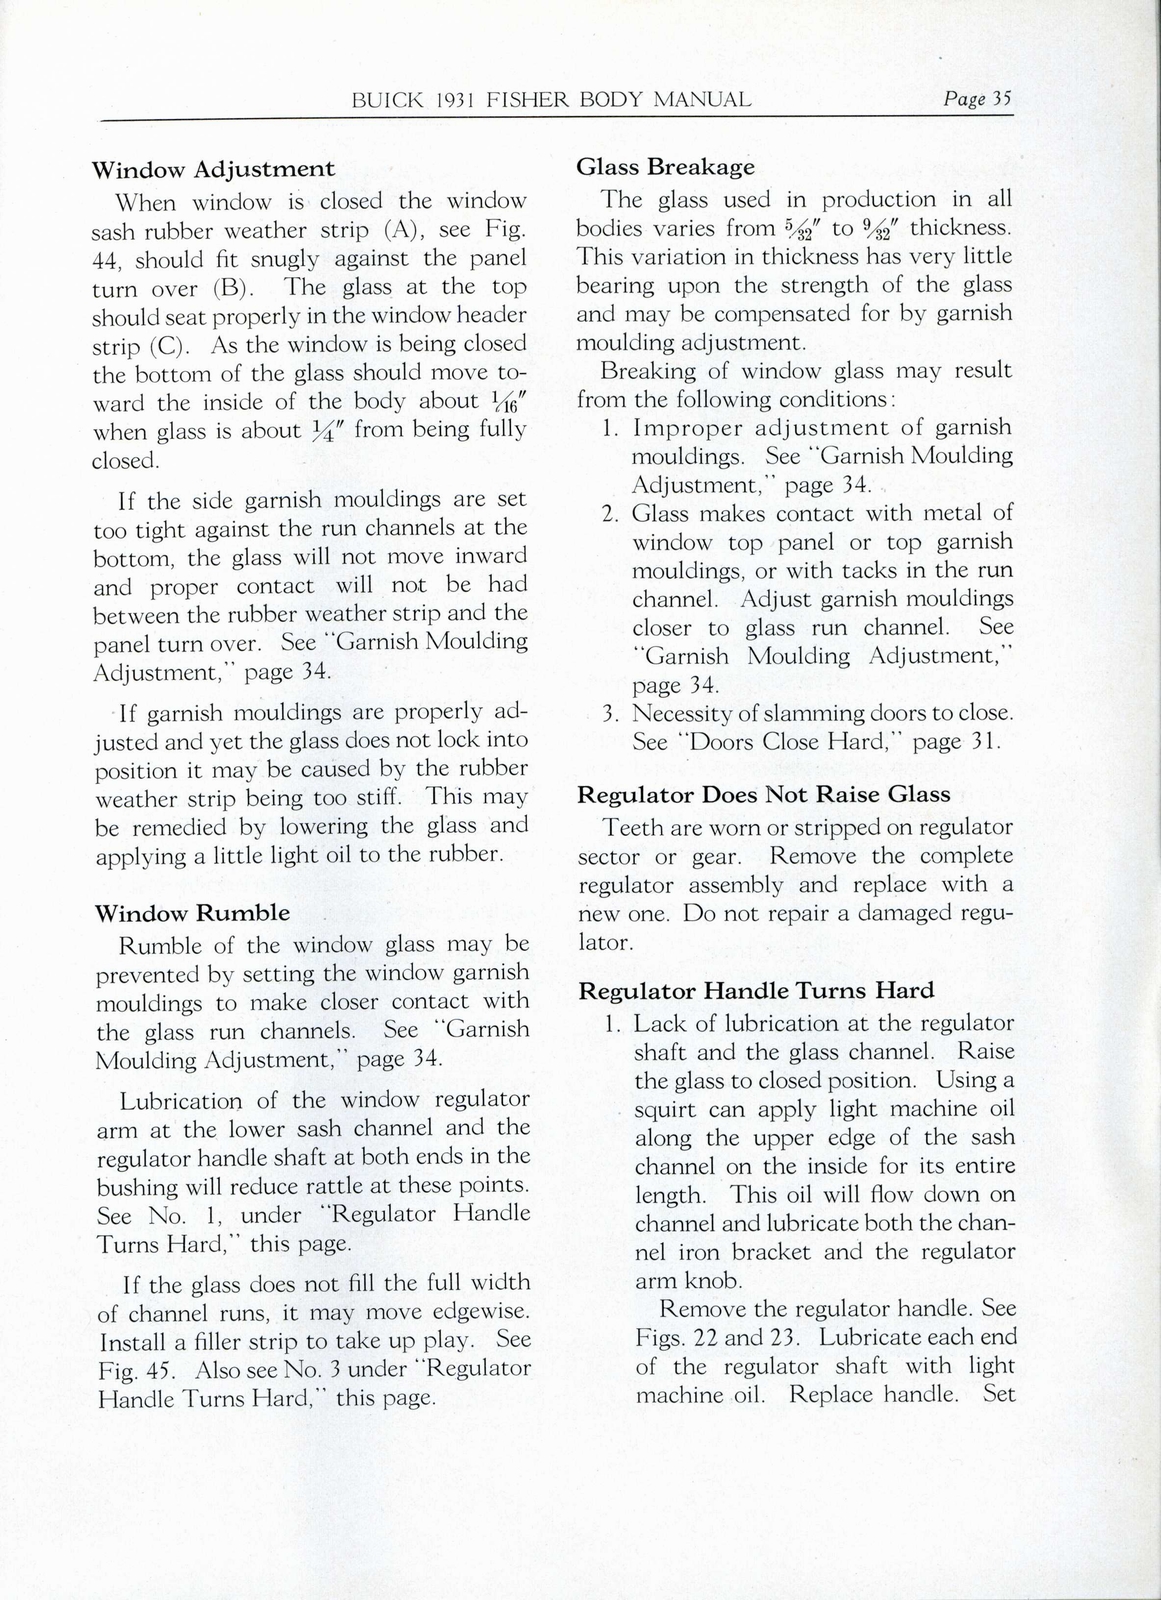 n_1931 Buick Fisher Body Manual-35.jpg